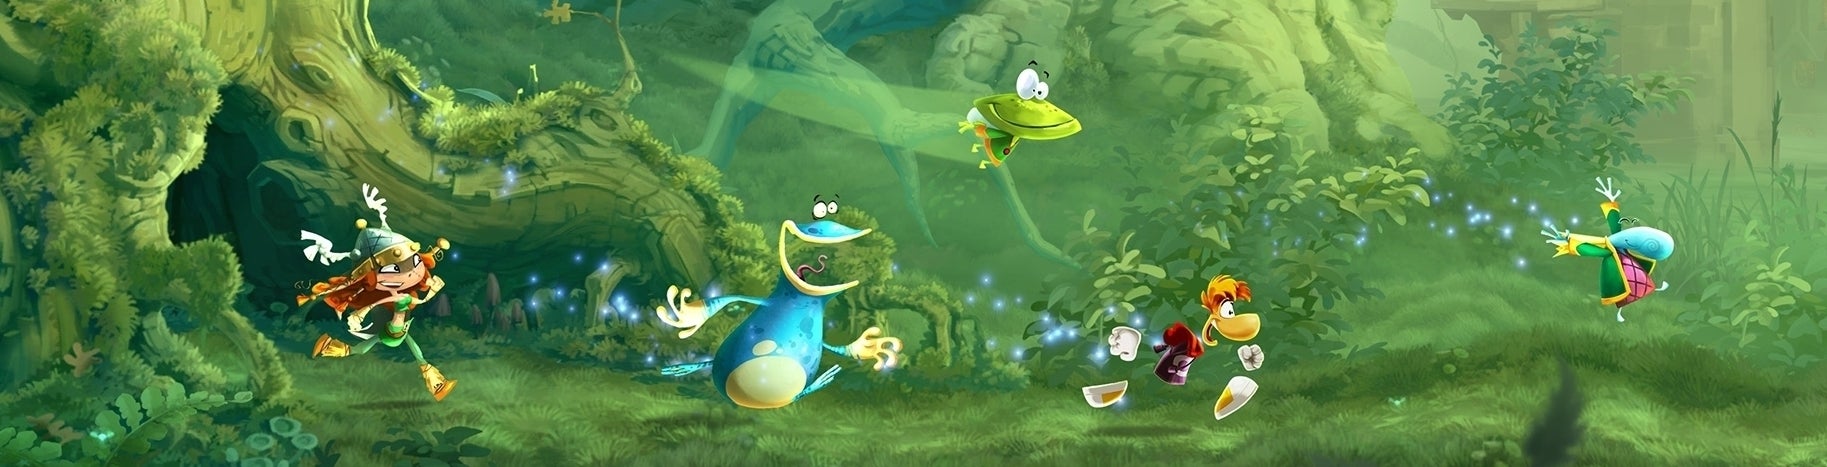 Imagem para Rayman Legends - Wii U - Análise